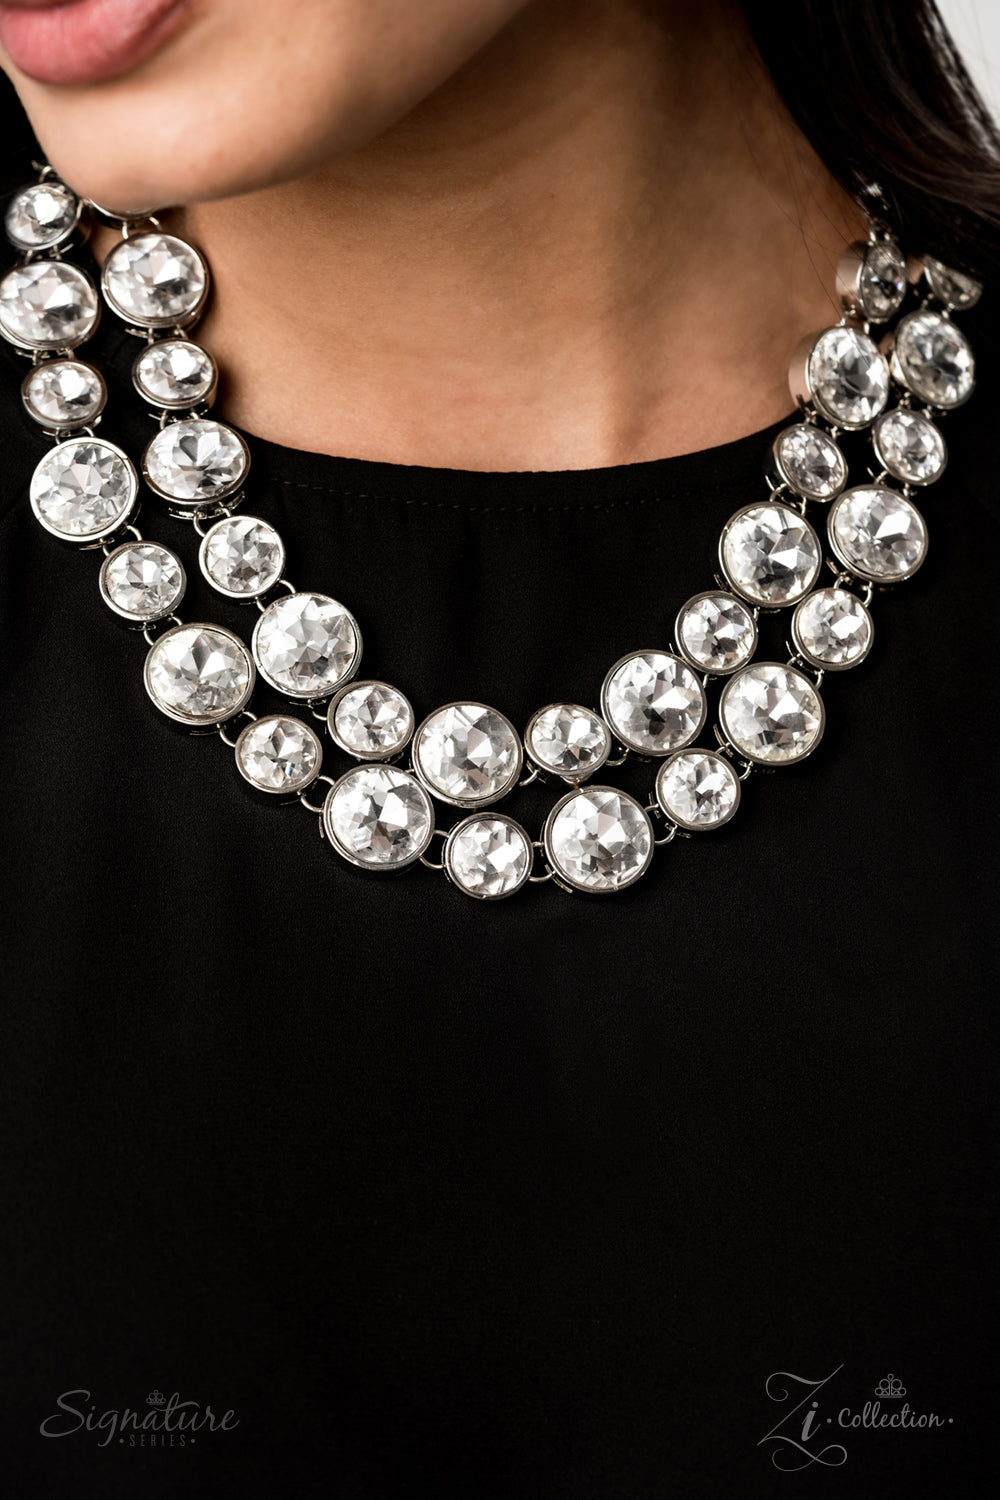 "The Natasha" - 2019 Zi Collection Silver Necklace set